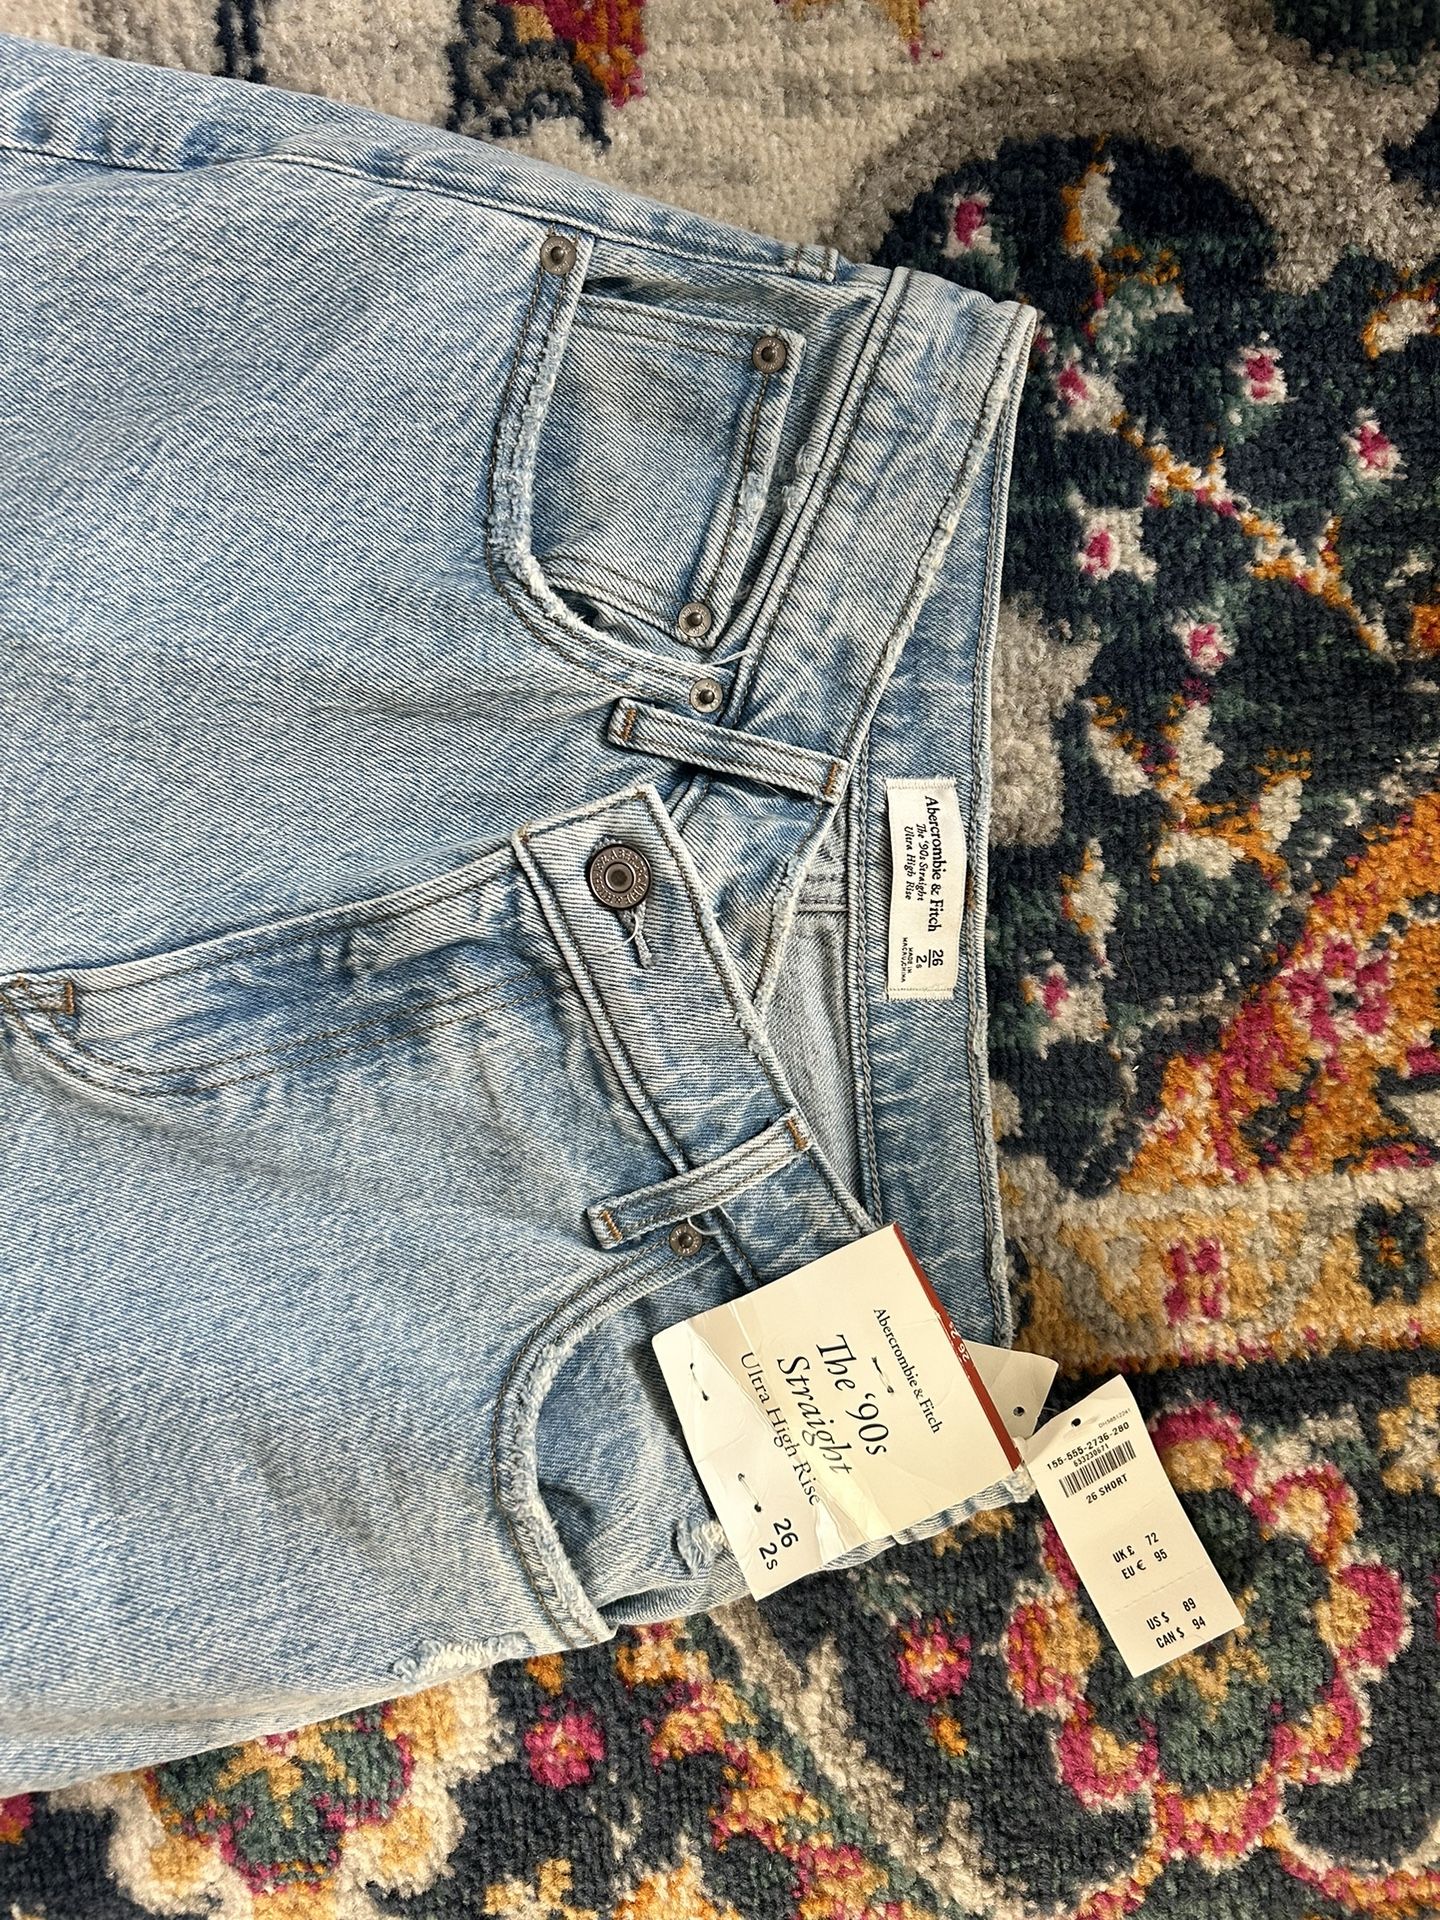 Abercrombie Jeans 